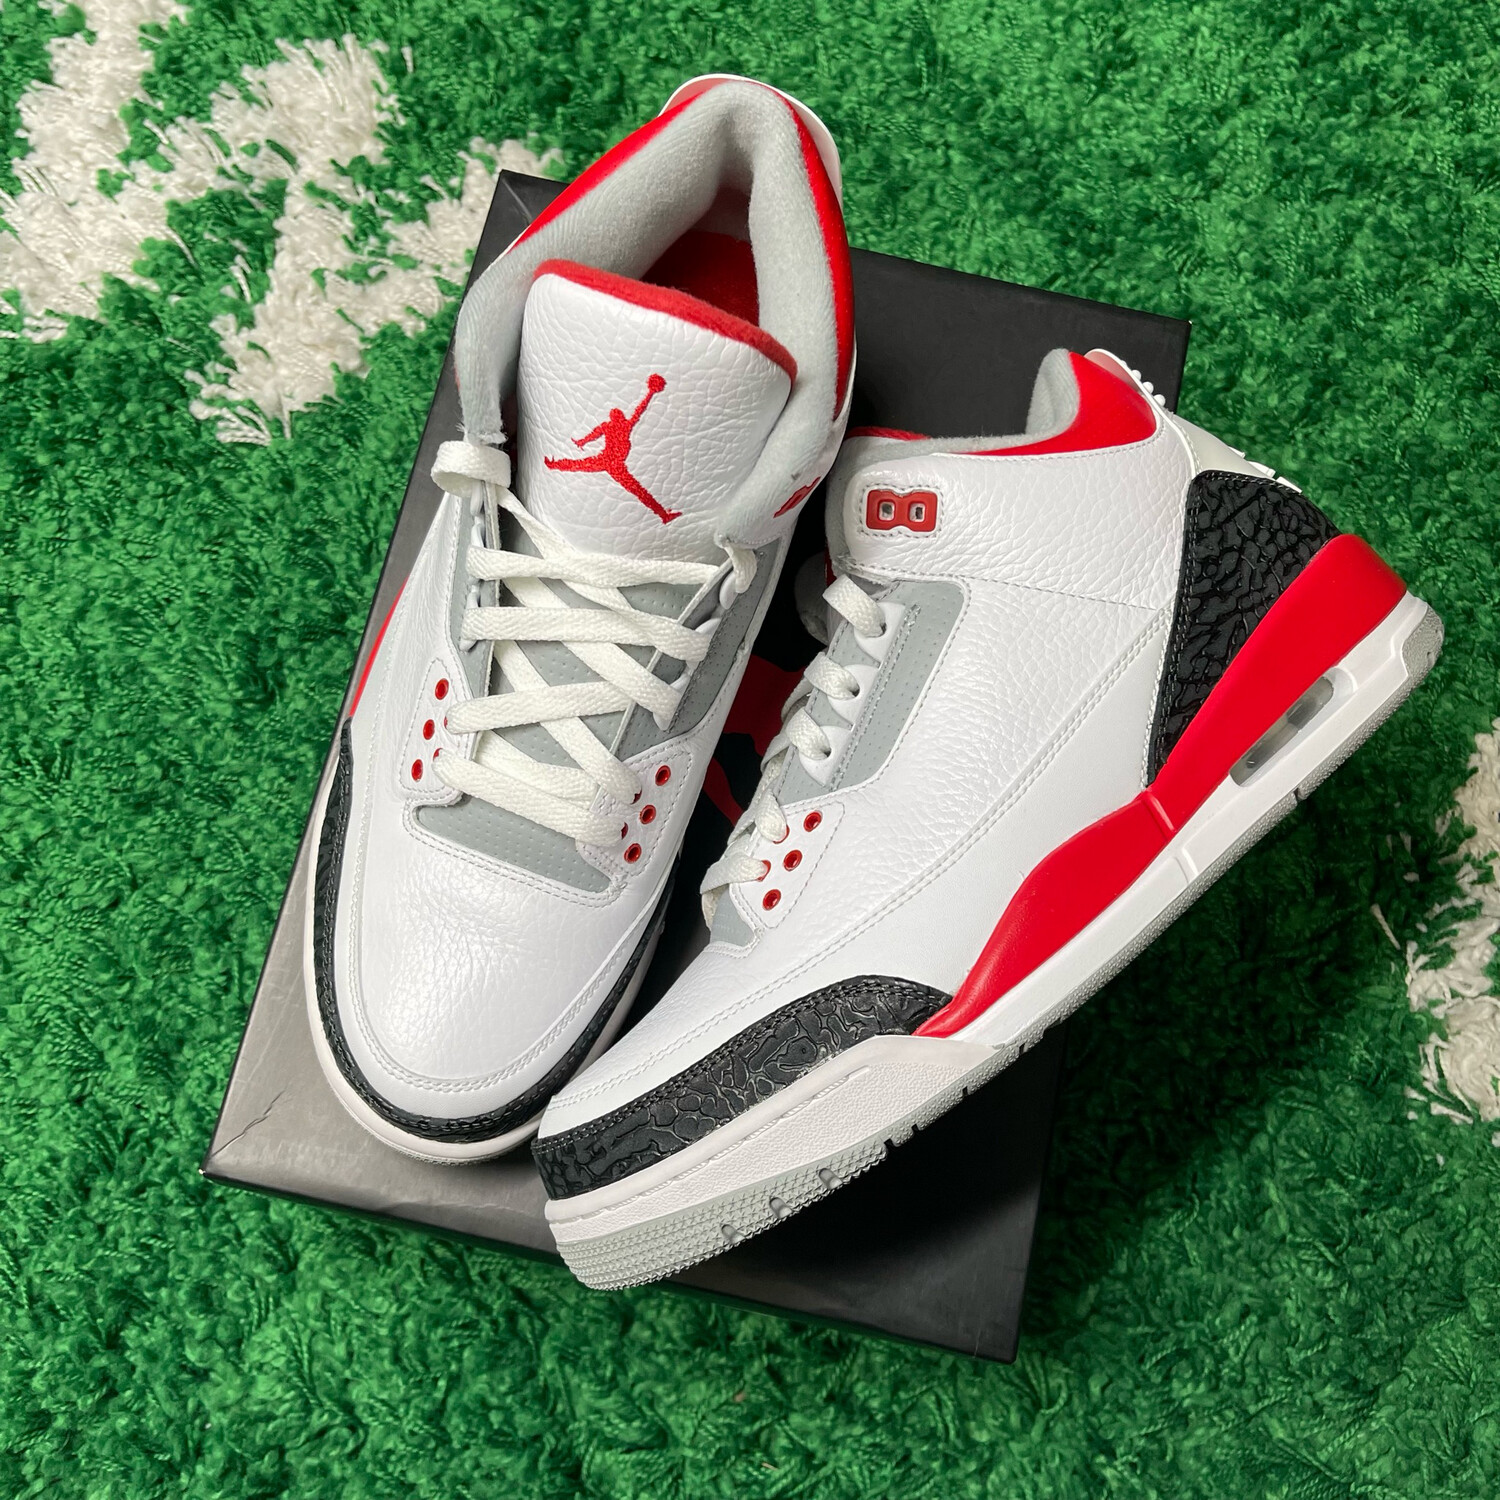 Jordan 3 Retro Fire Red (2013) Size 10